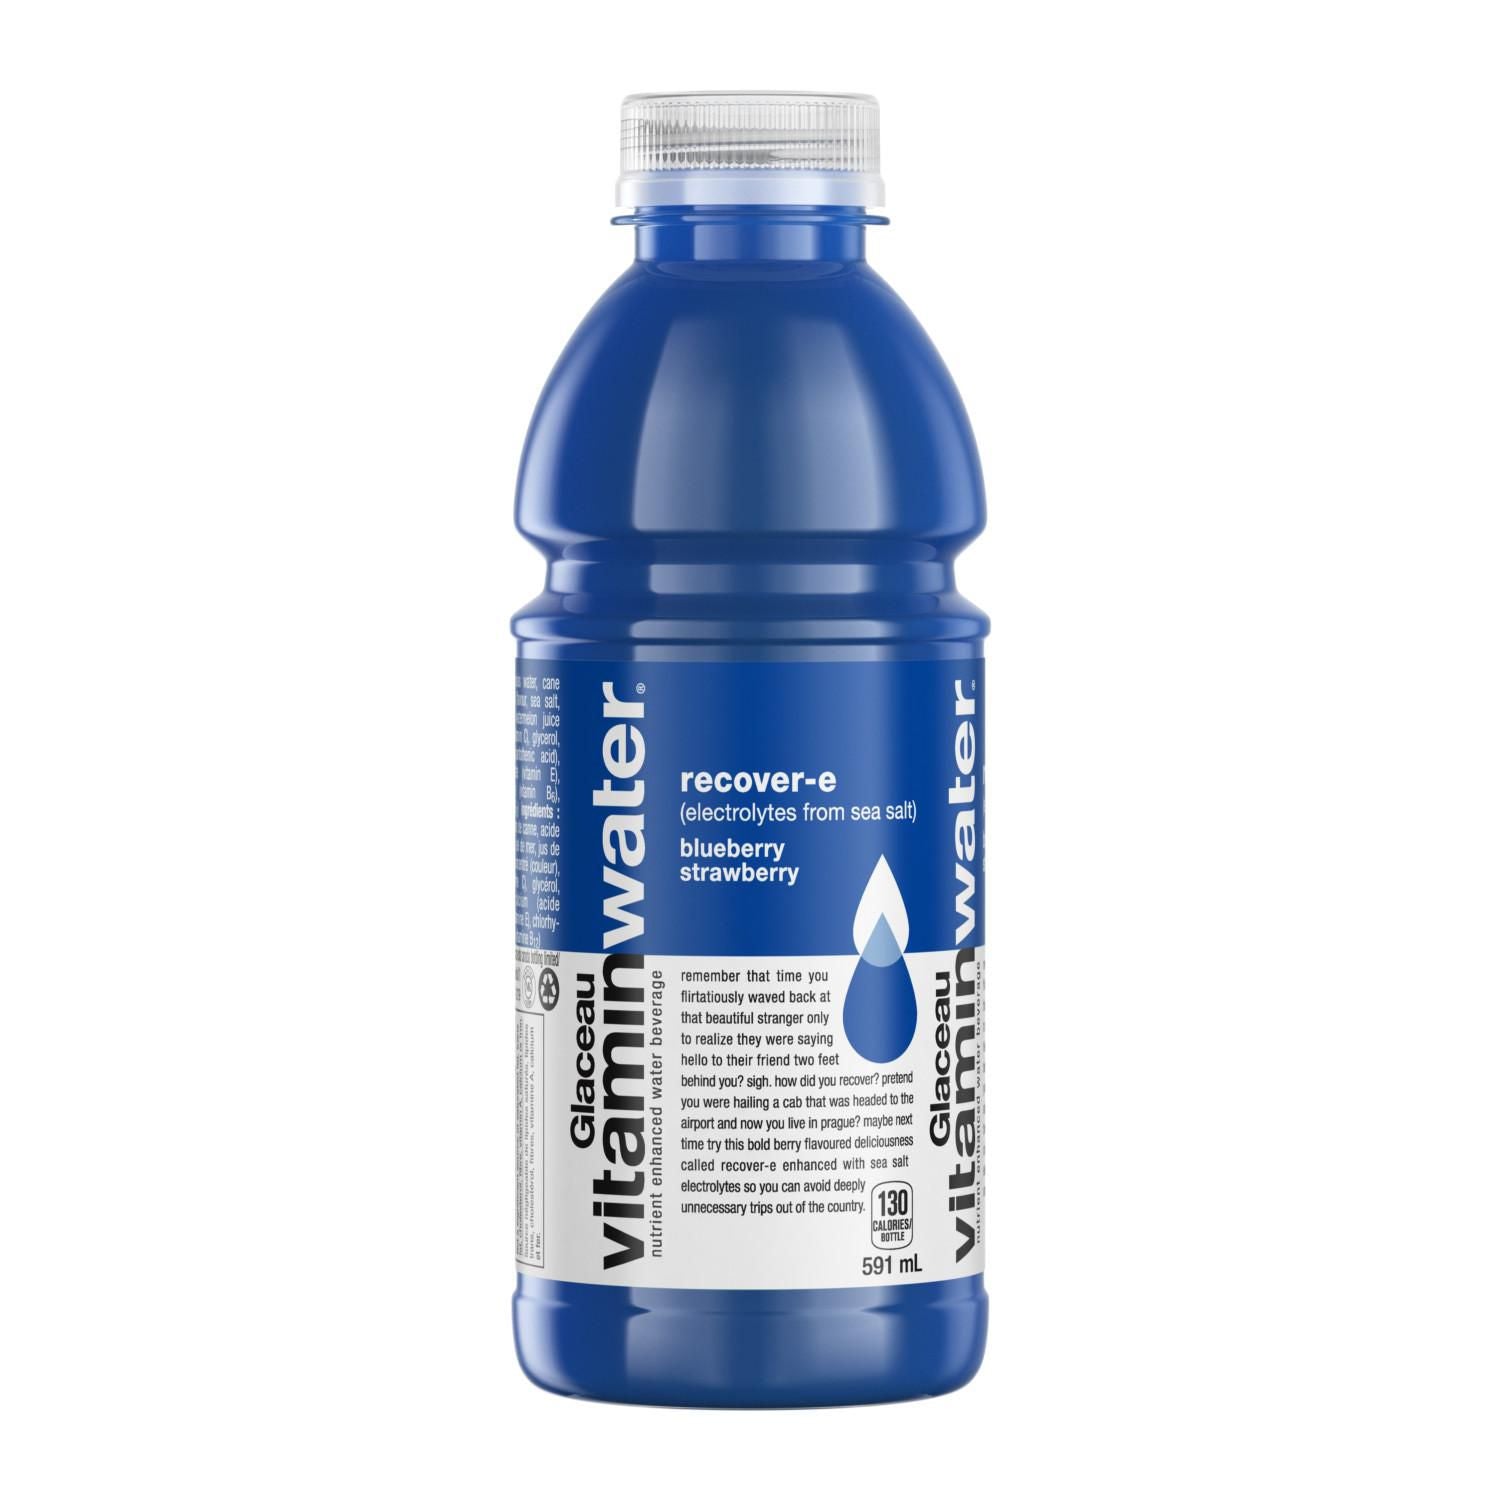 Glaceau Vitamin Water Recover-E